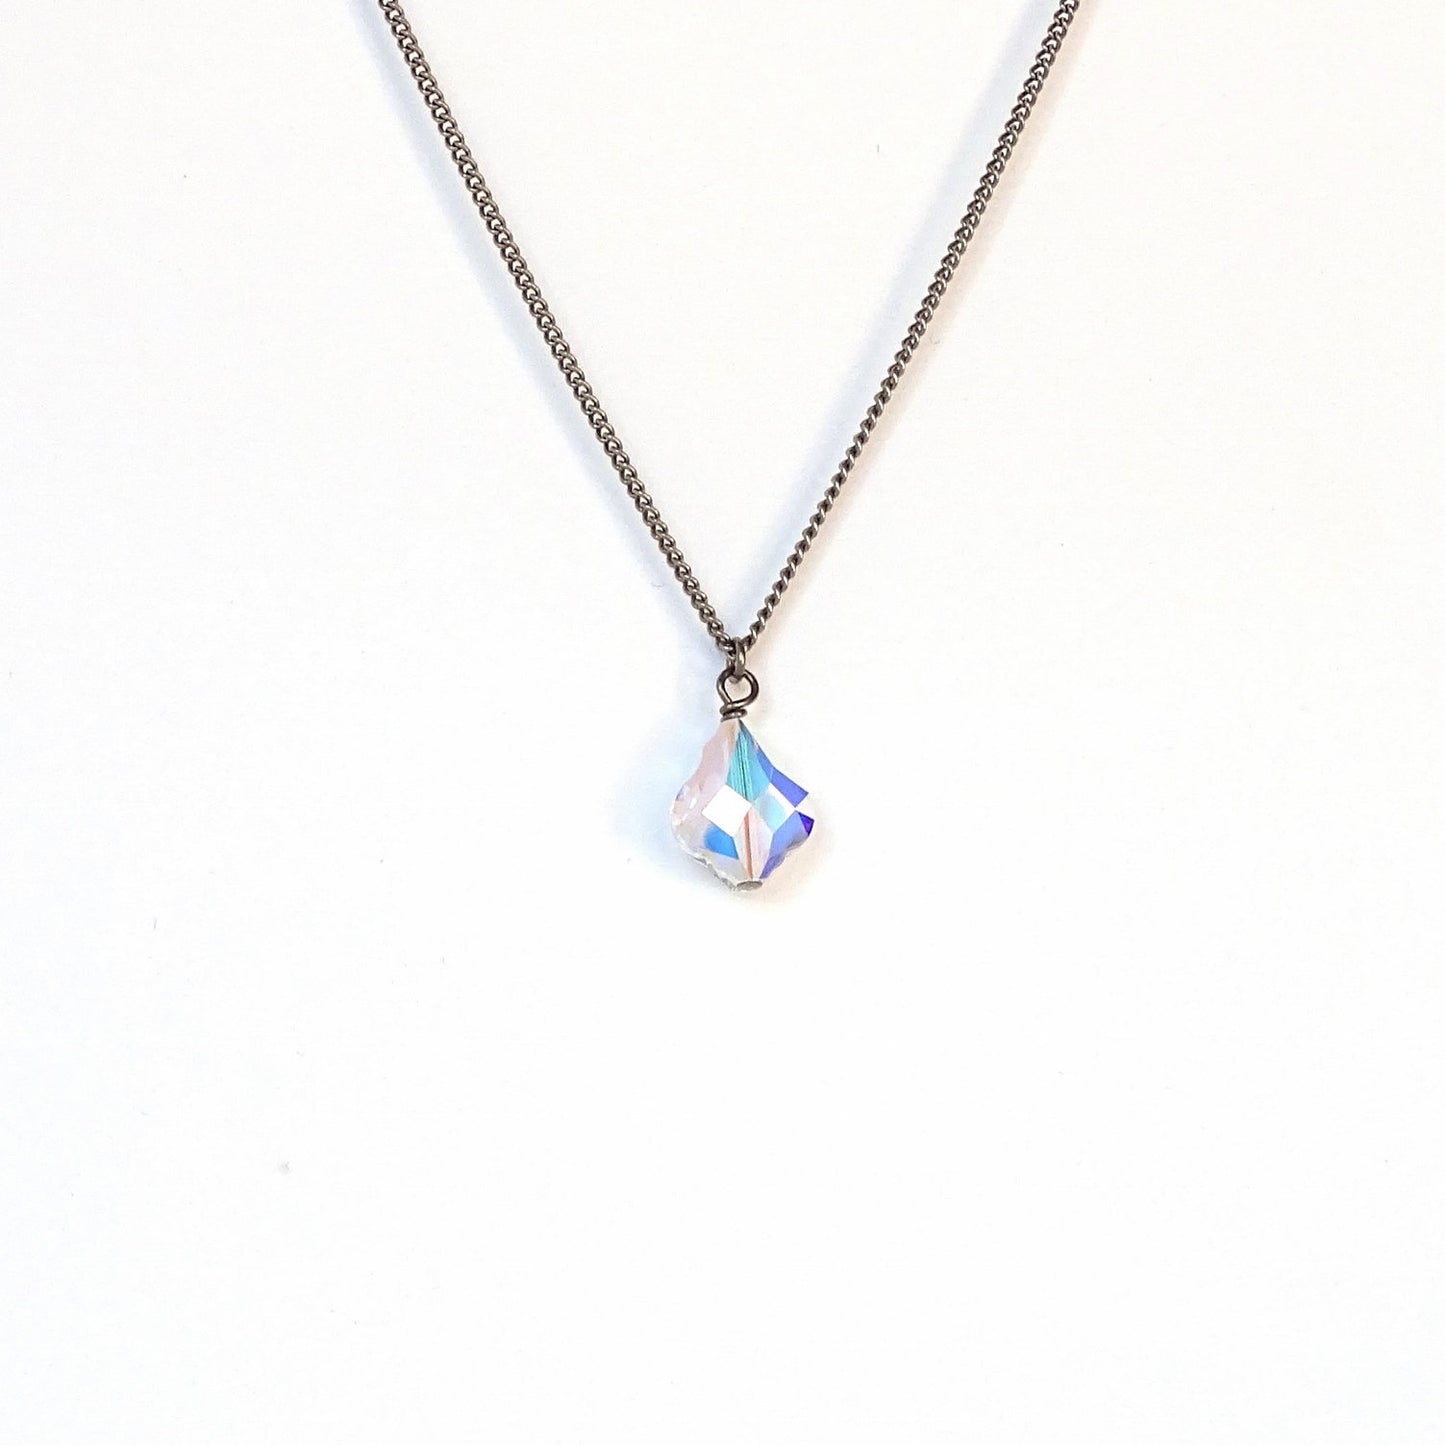 Aurora Borealis Baroque Crystal Titanium Necklace, Nickel Free Necklace For Sensitive Skin, Clear AB Swarovski Crystal Pure Titanium Jewelry